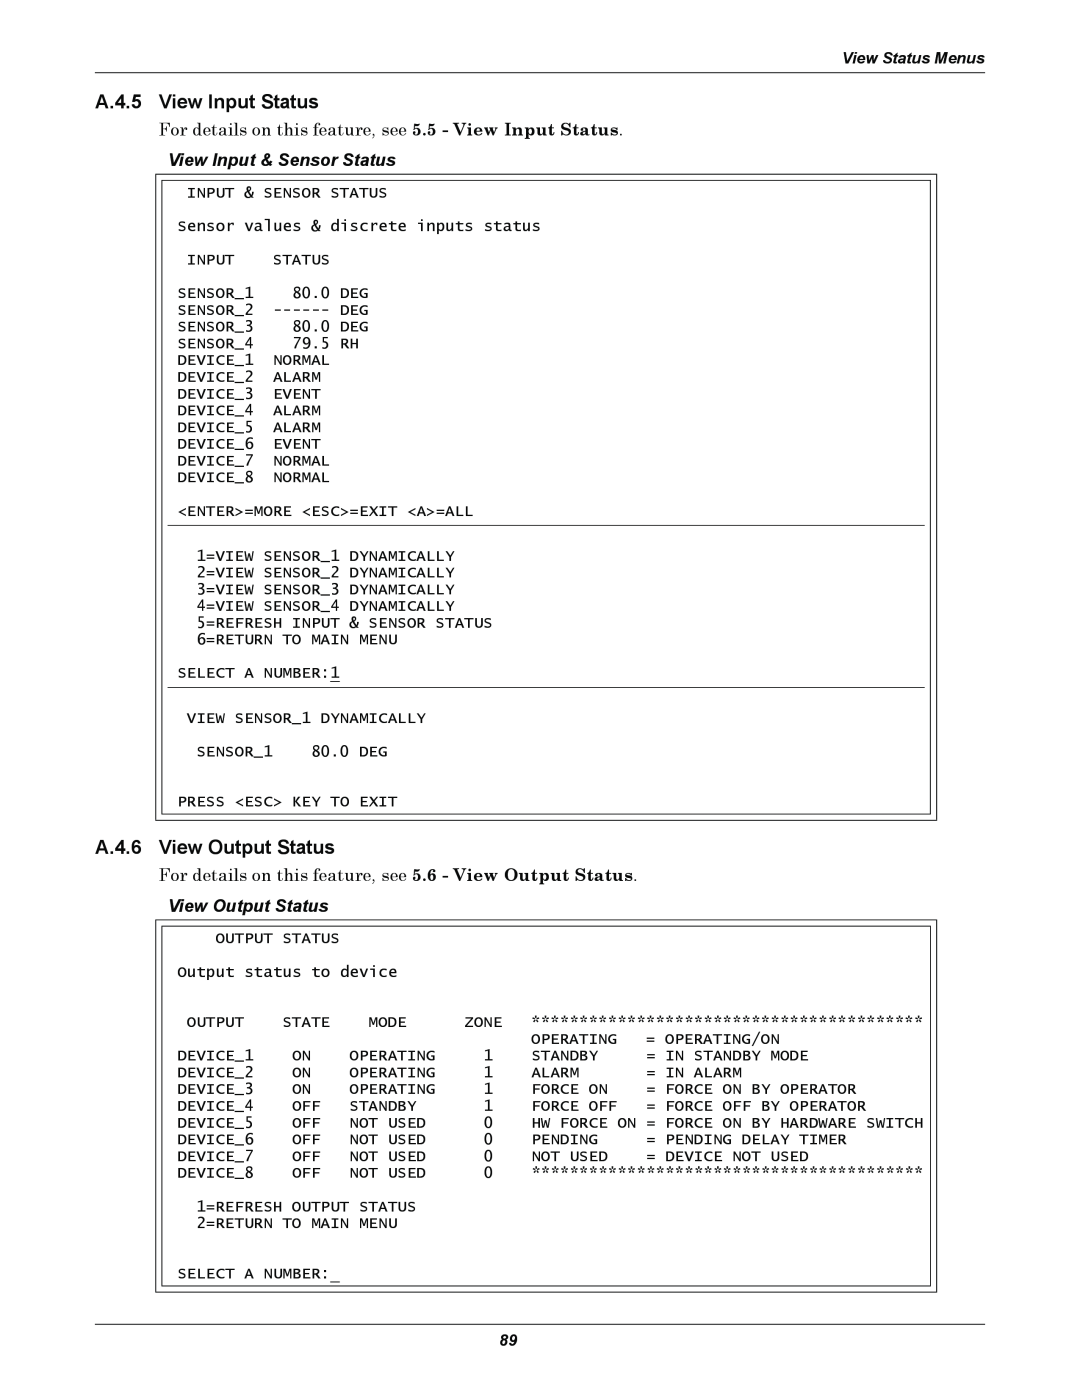 Emerson AC8 user manual A.4.5 View Input Status, A.4.6 View Output Status, View Input & Sensor Status 